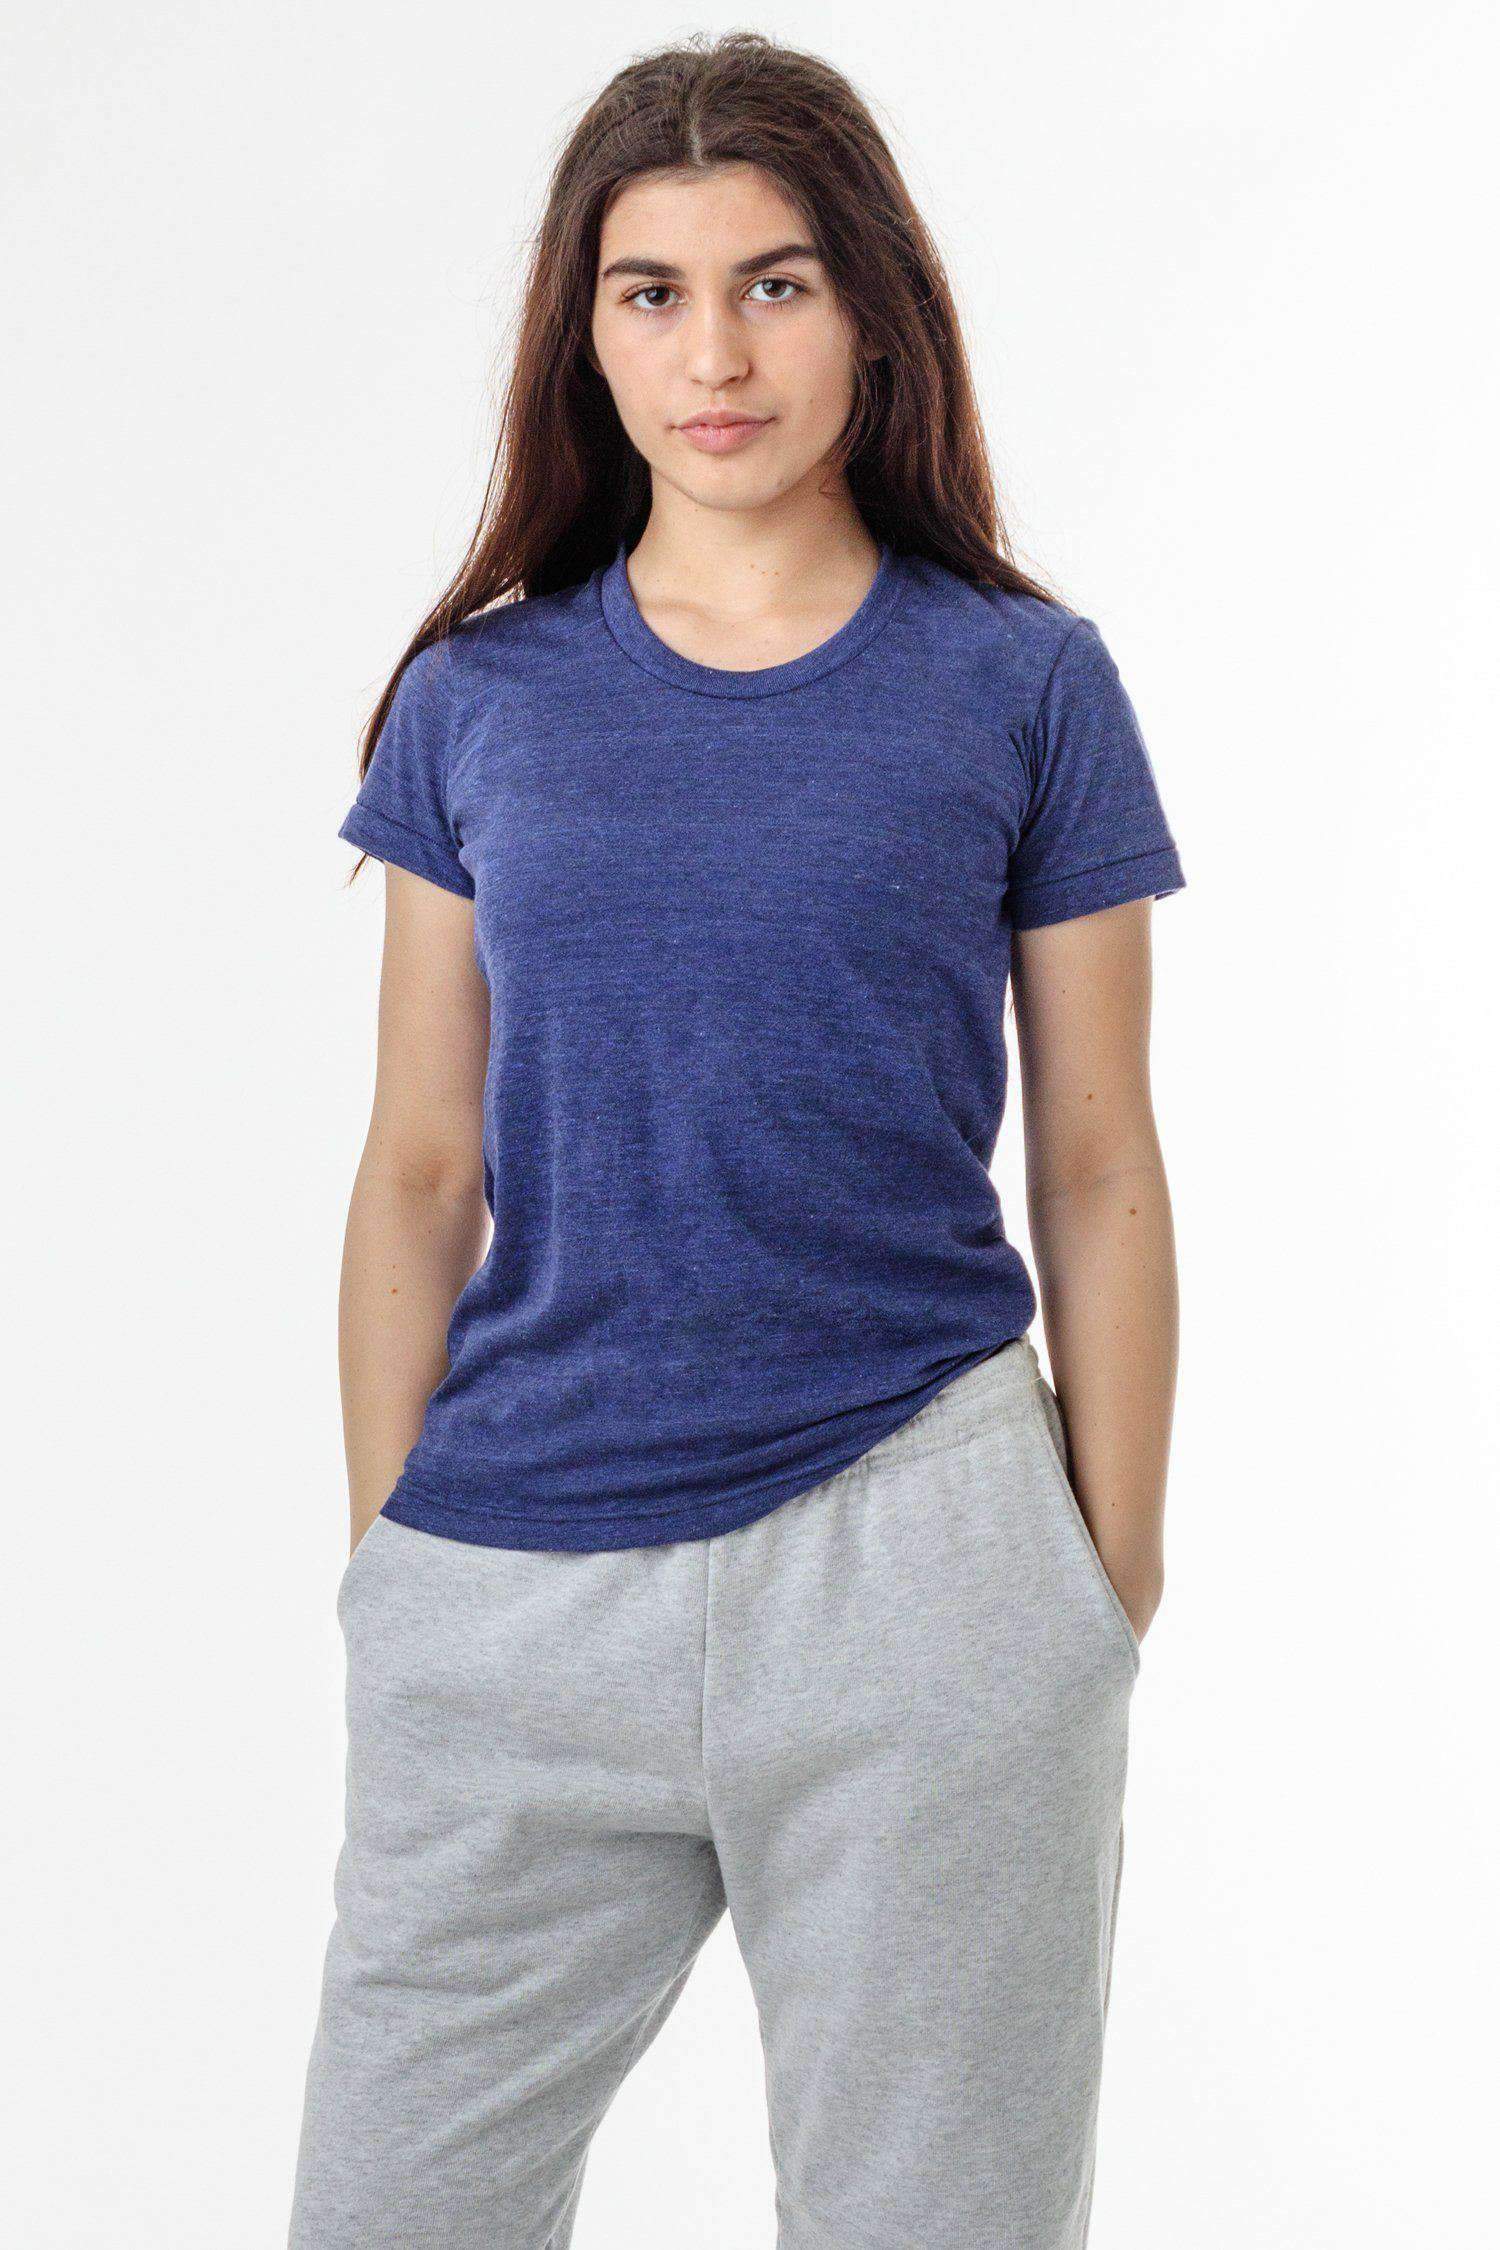 TR3001 - Short Sleeve Tri-Blend T-Shirt T-Shirt Los Angeles Apparel Tri-Indigo S 